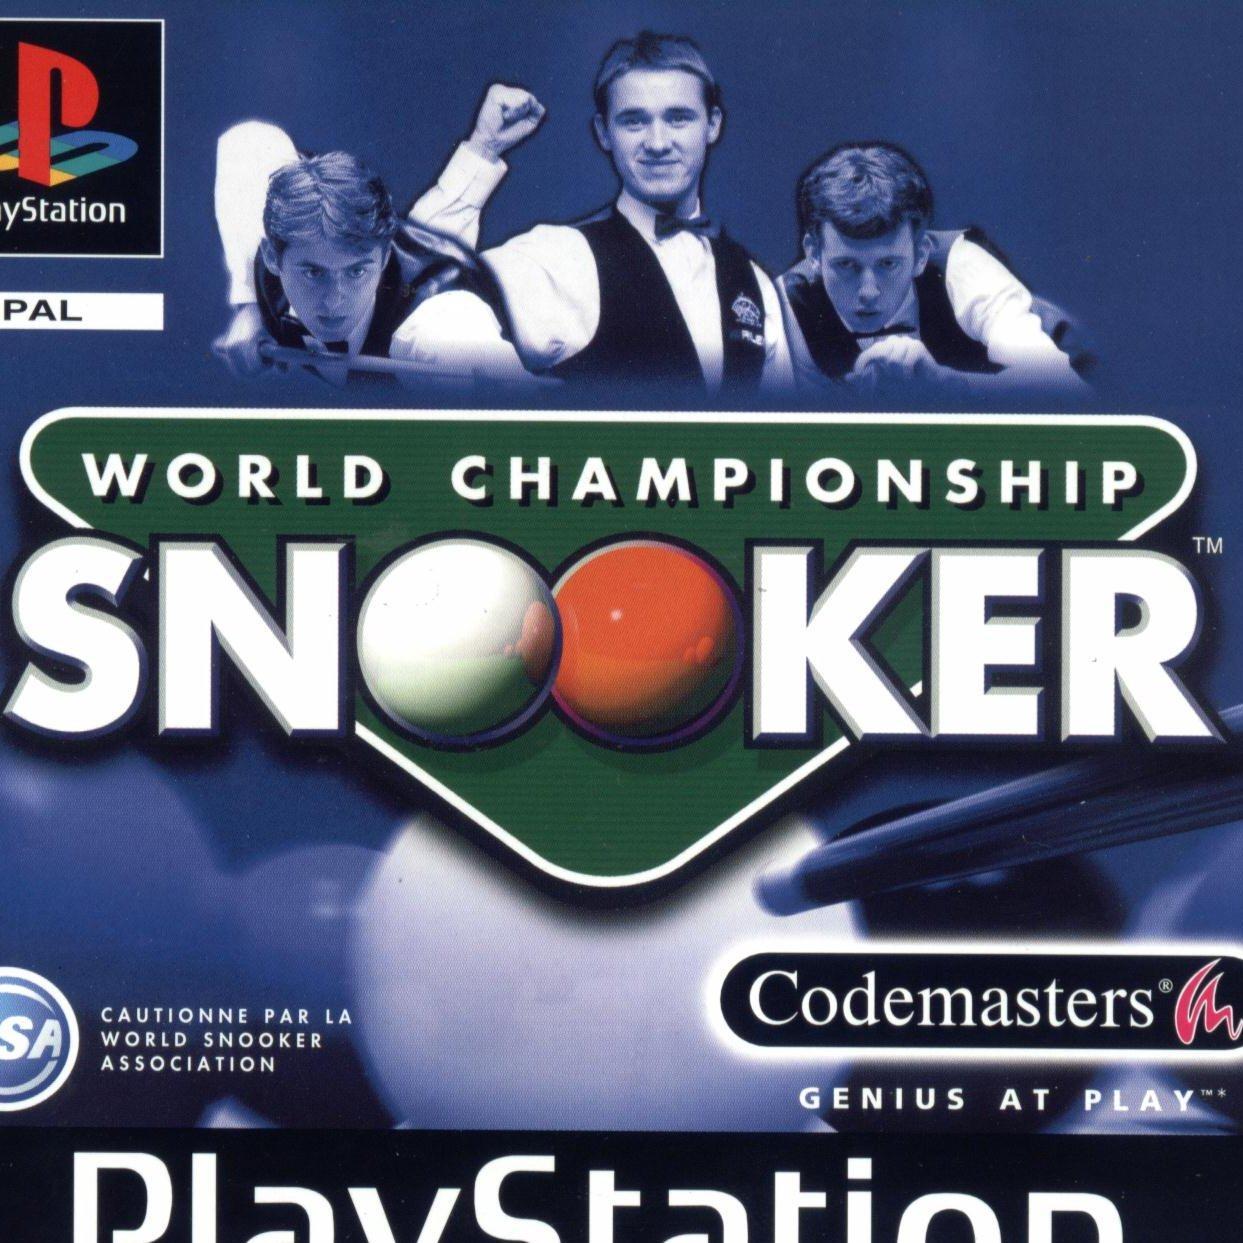 World Championship Snooker psx download